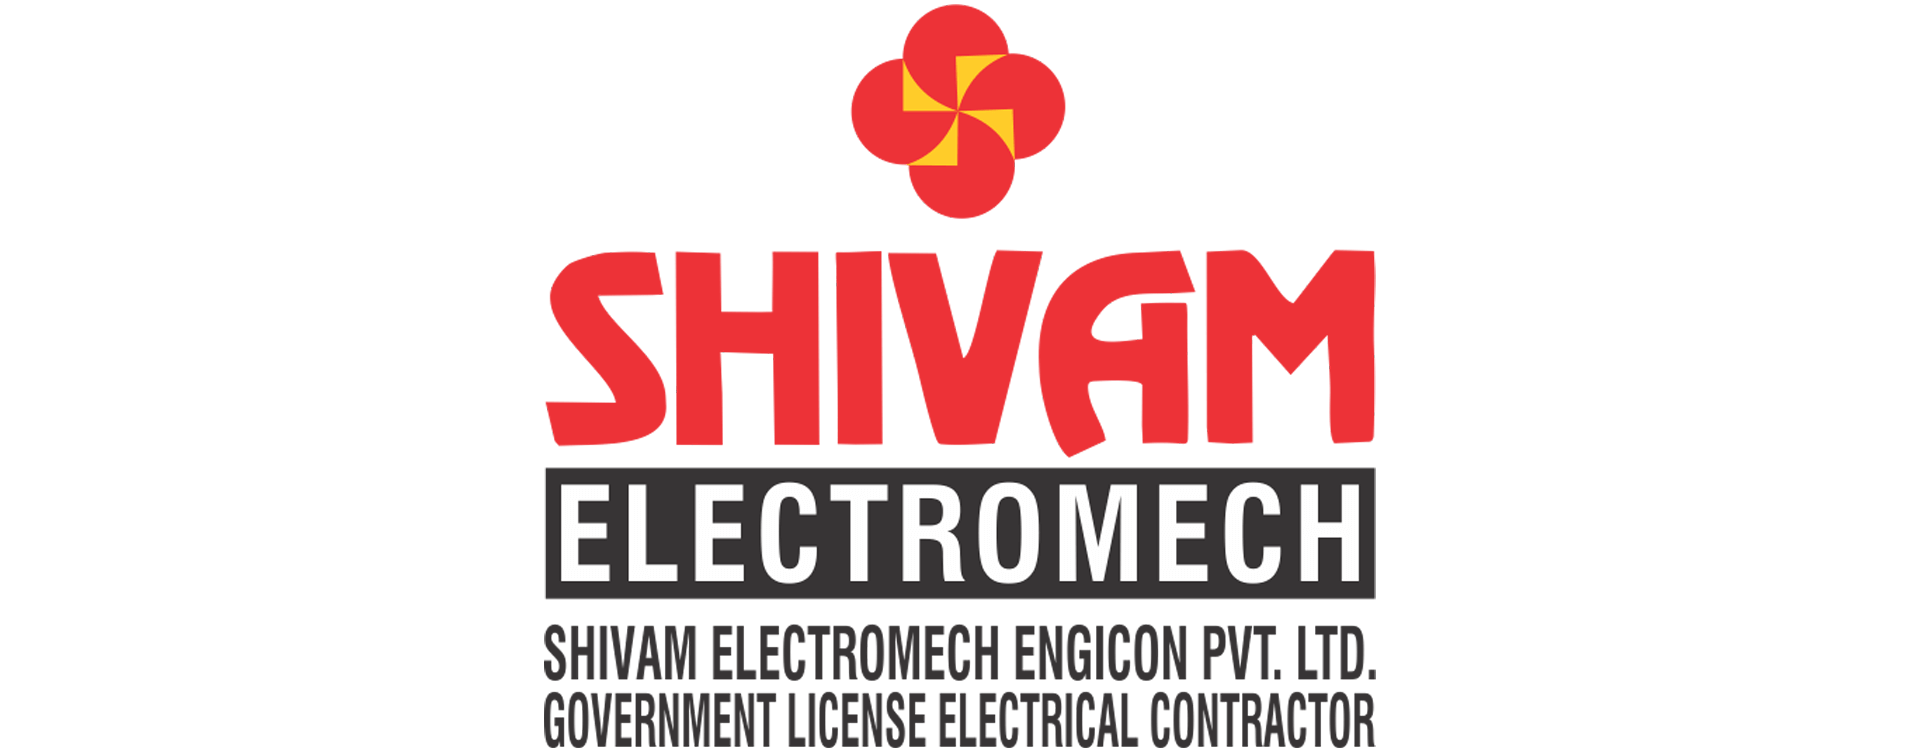 Shivam Electromech